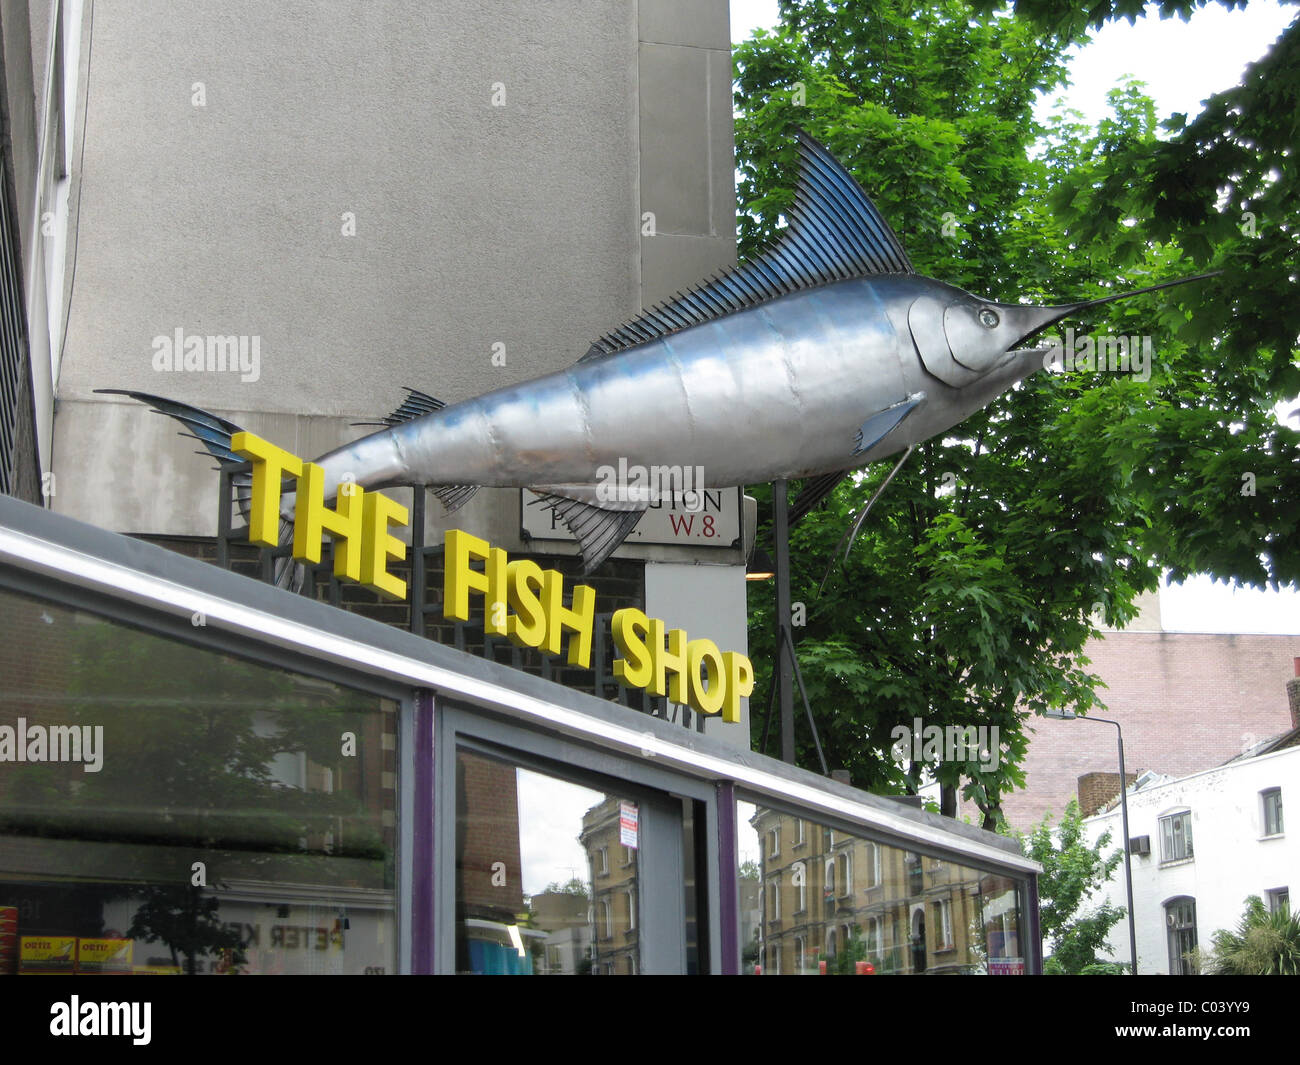 Die Fische shop anmelden Kensington Place London W8 Stockfoto